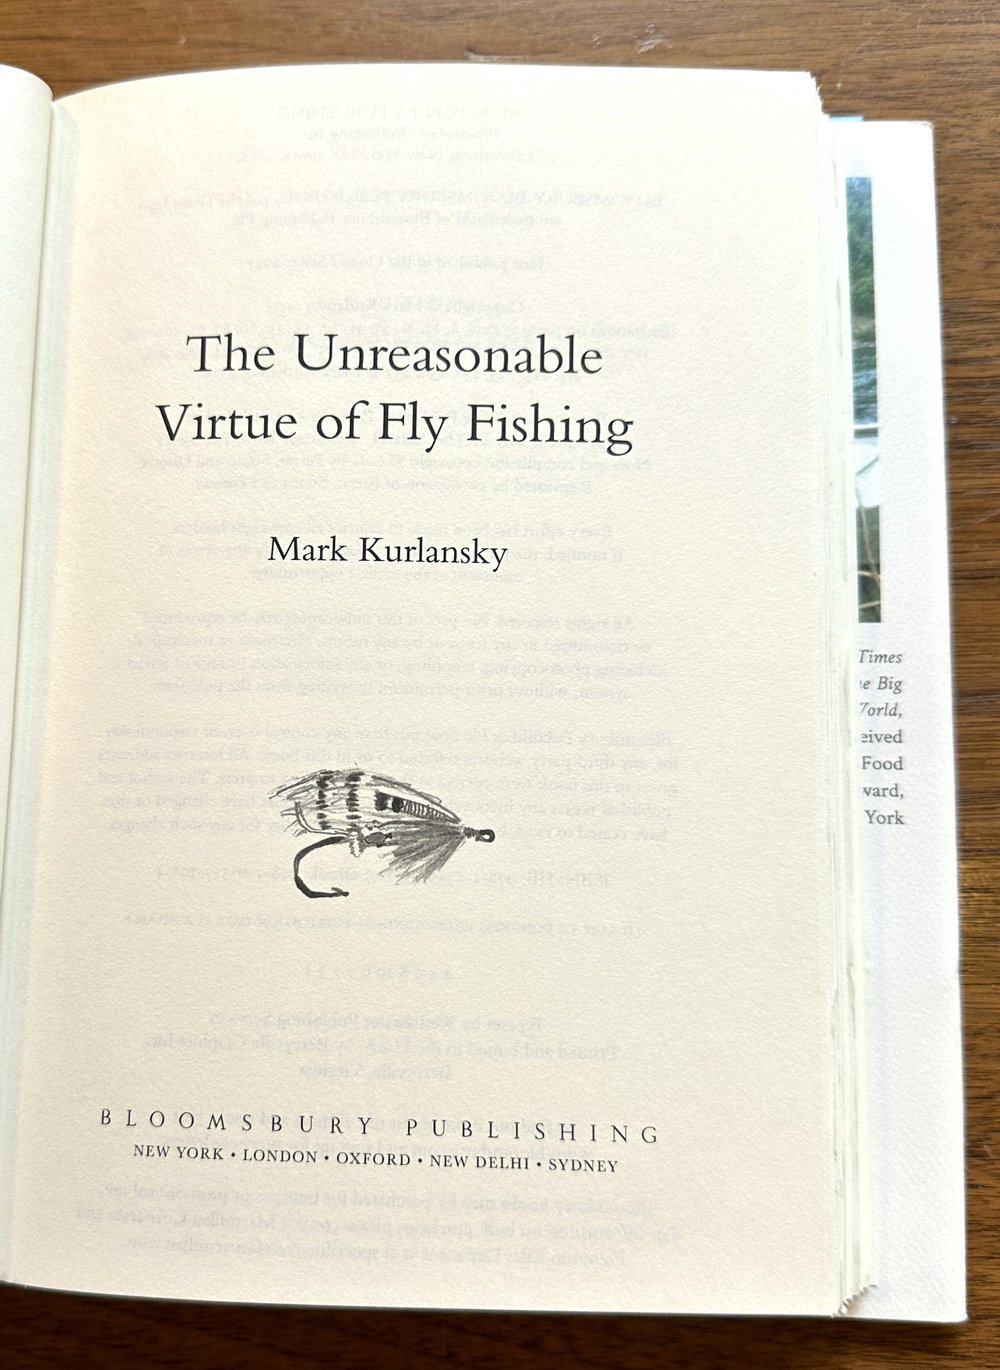 The Unreasonable Virtue of Fly Fishing, by Mark Kurlansky